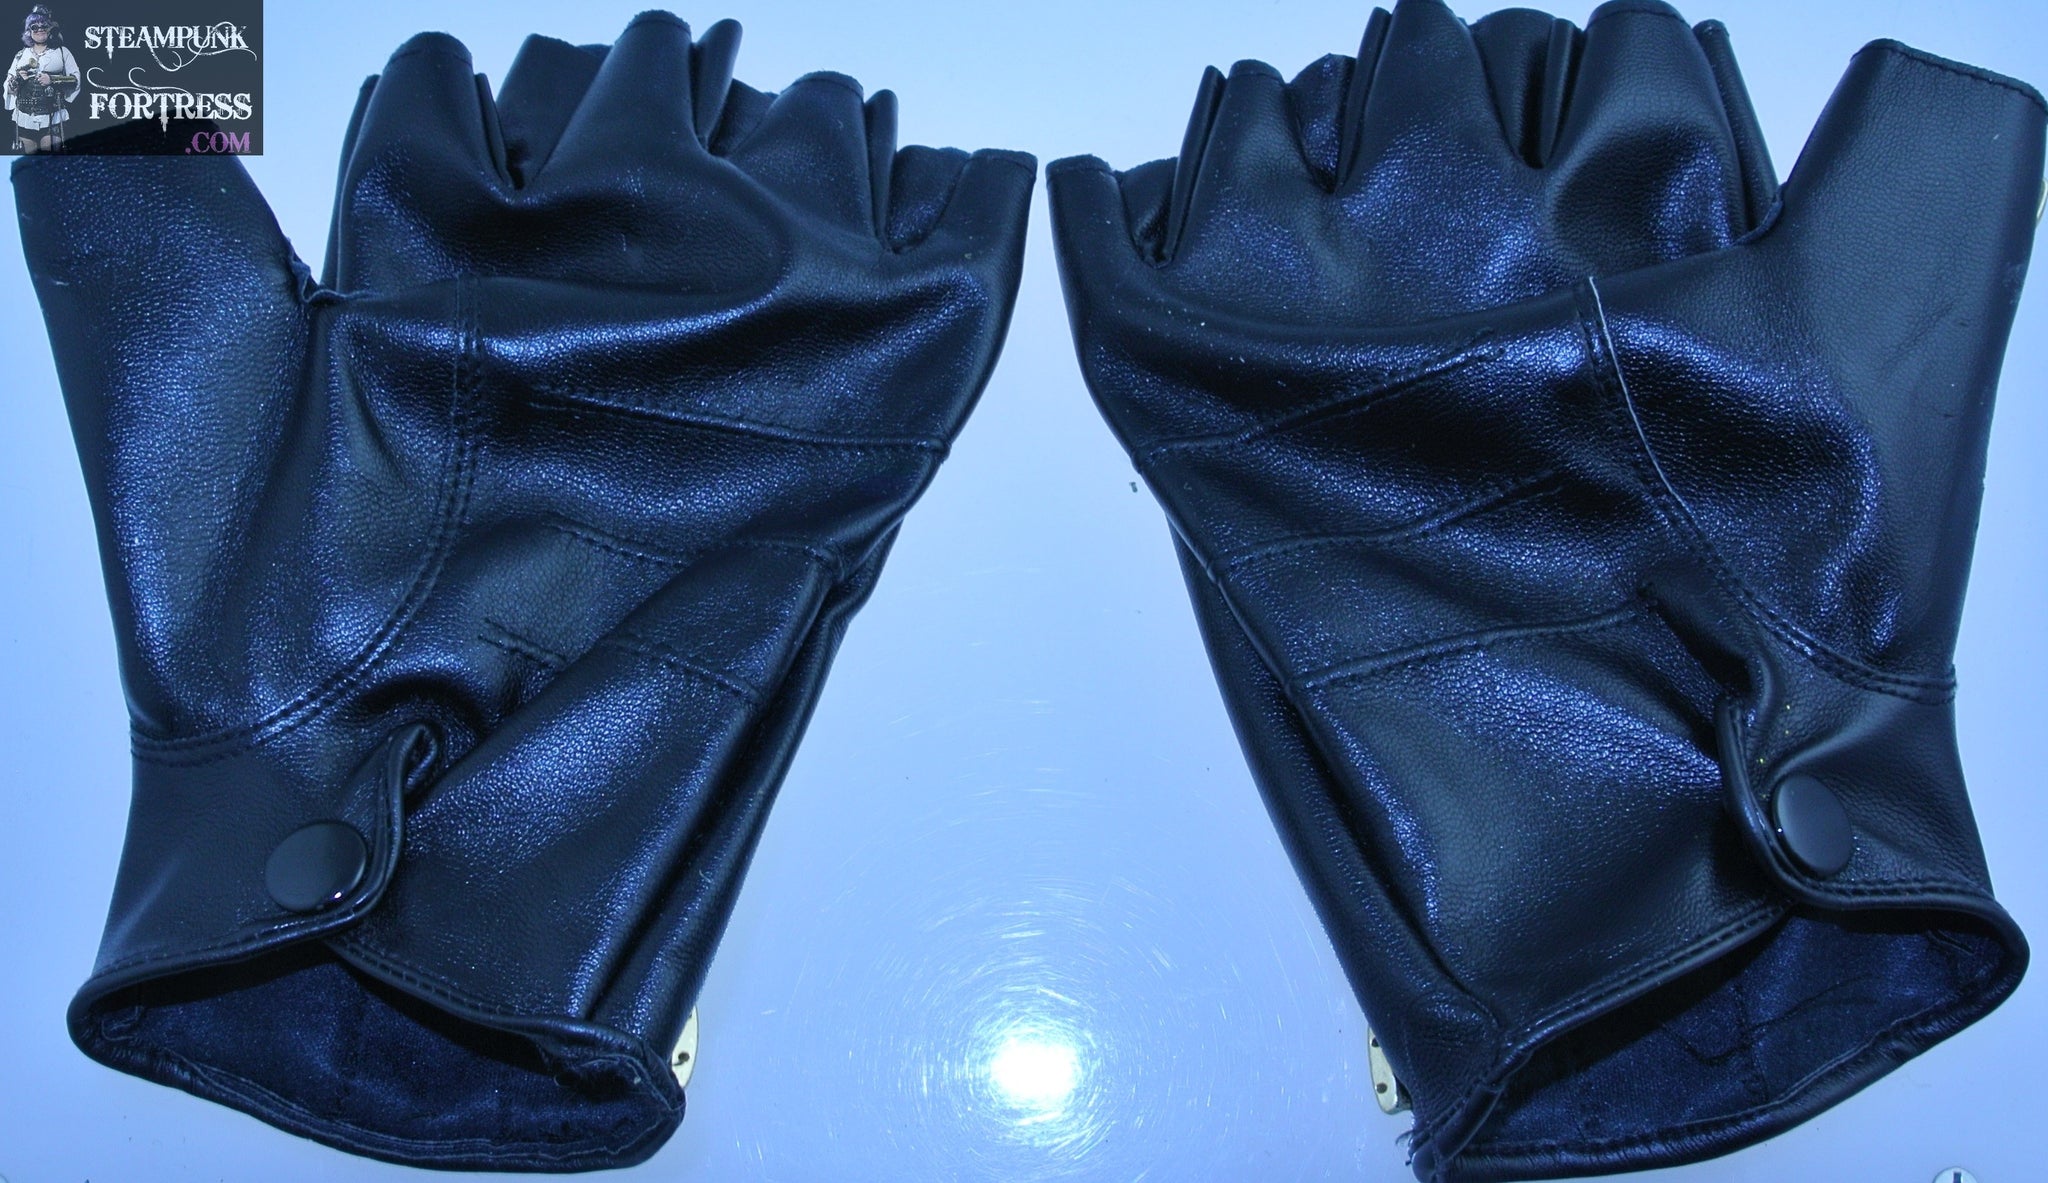 Skeleteen Fingerless Faux Leather Gloves